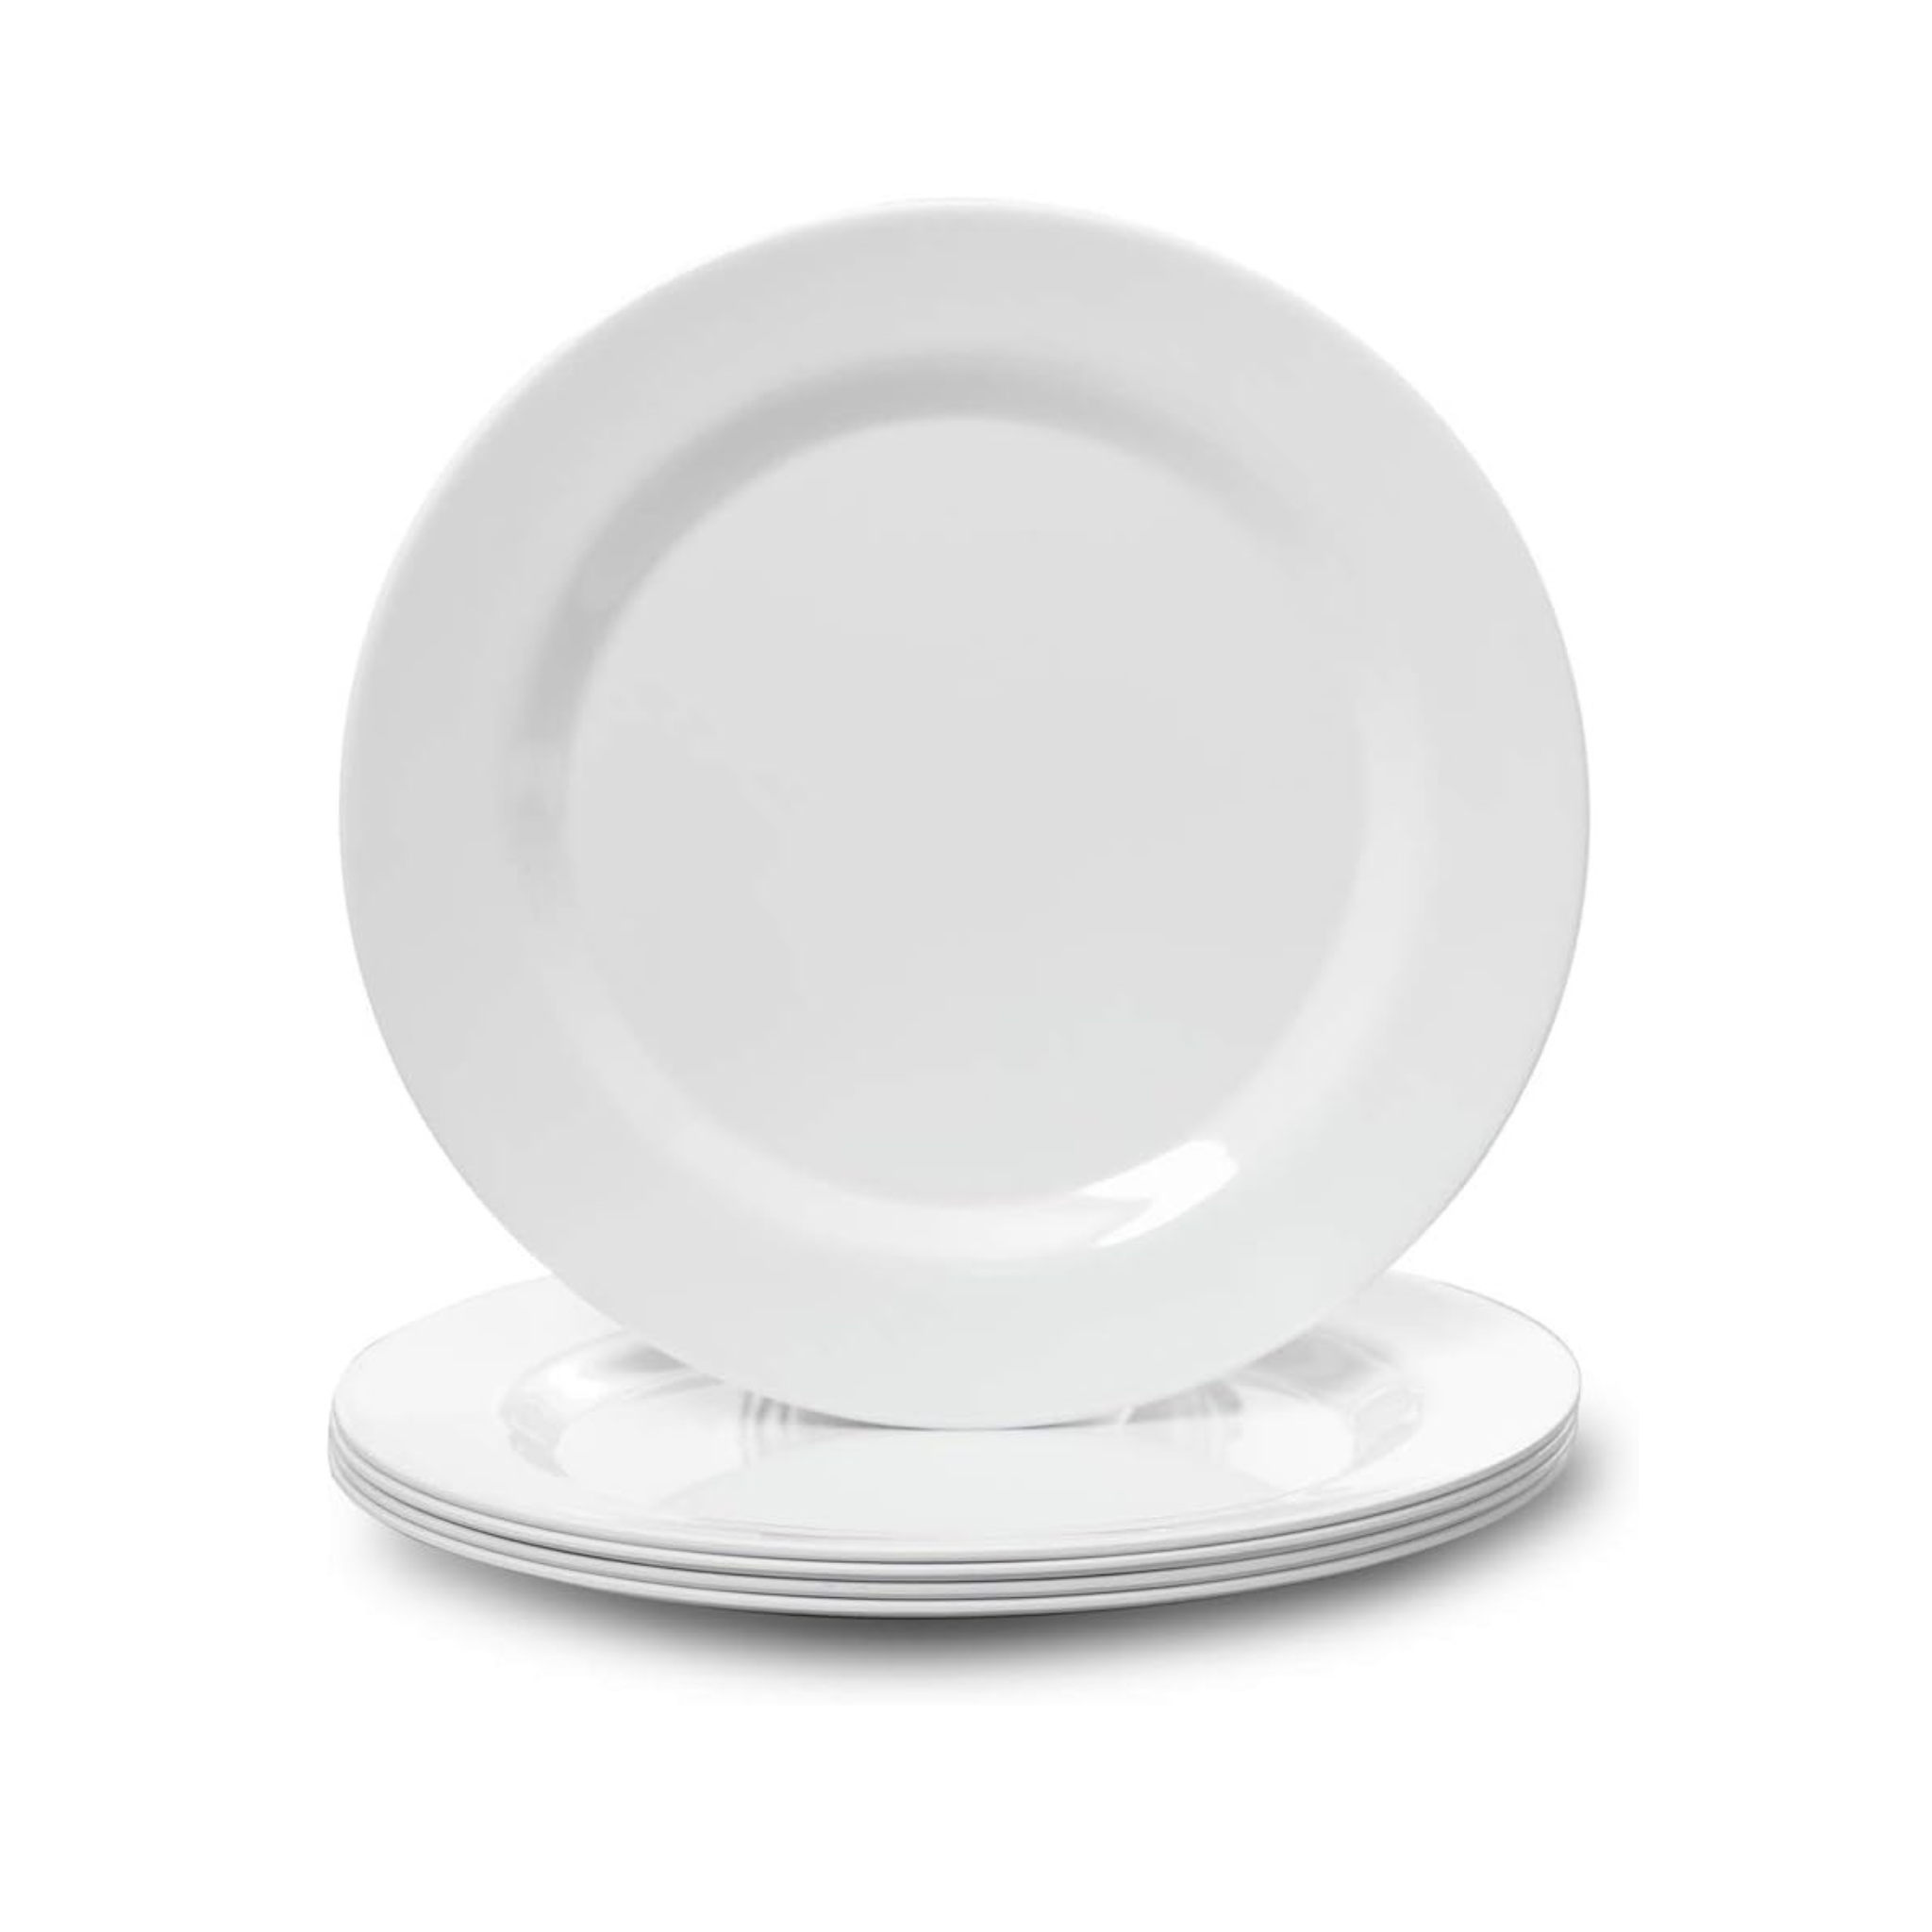 6-Piece Yummost Melamine Break-resistant Dinner Plates